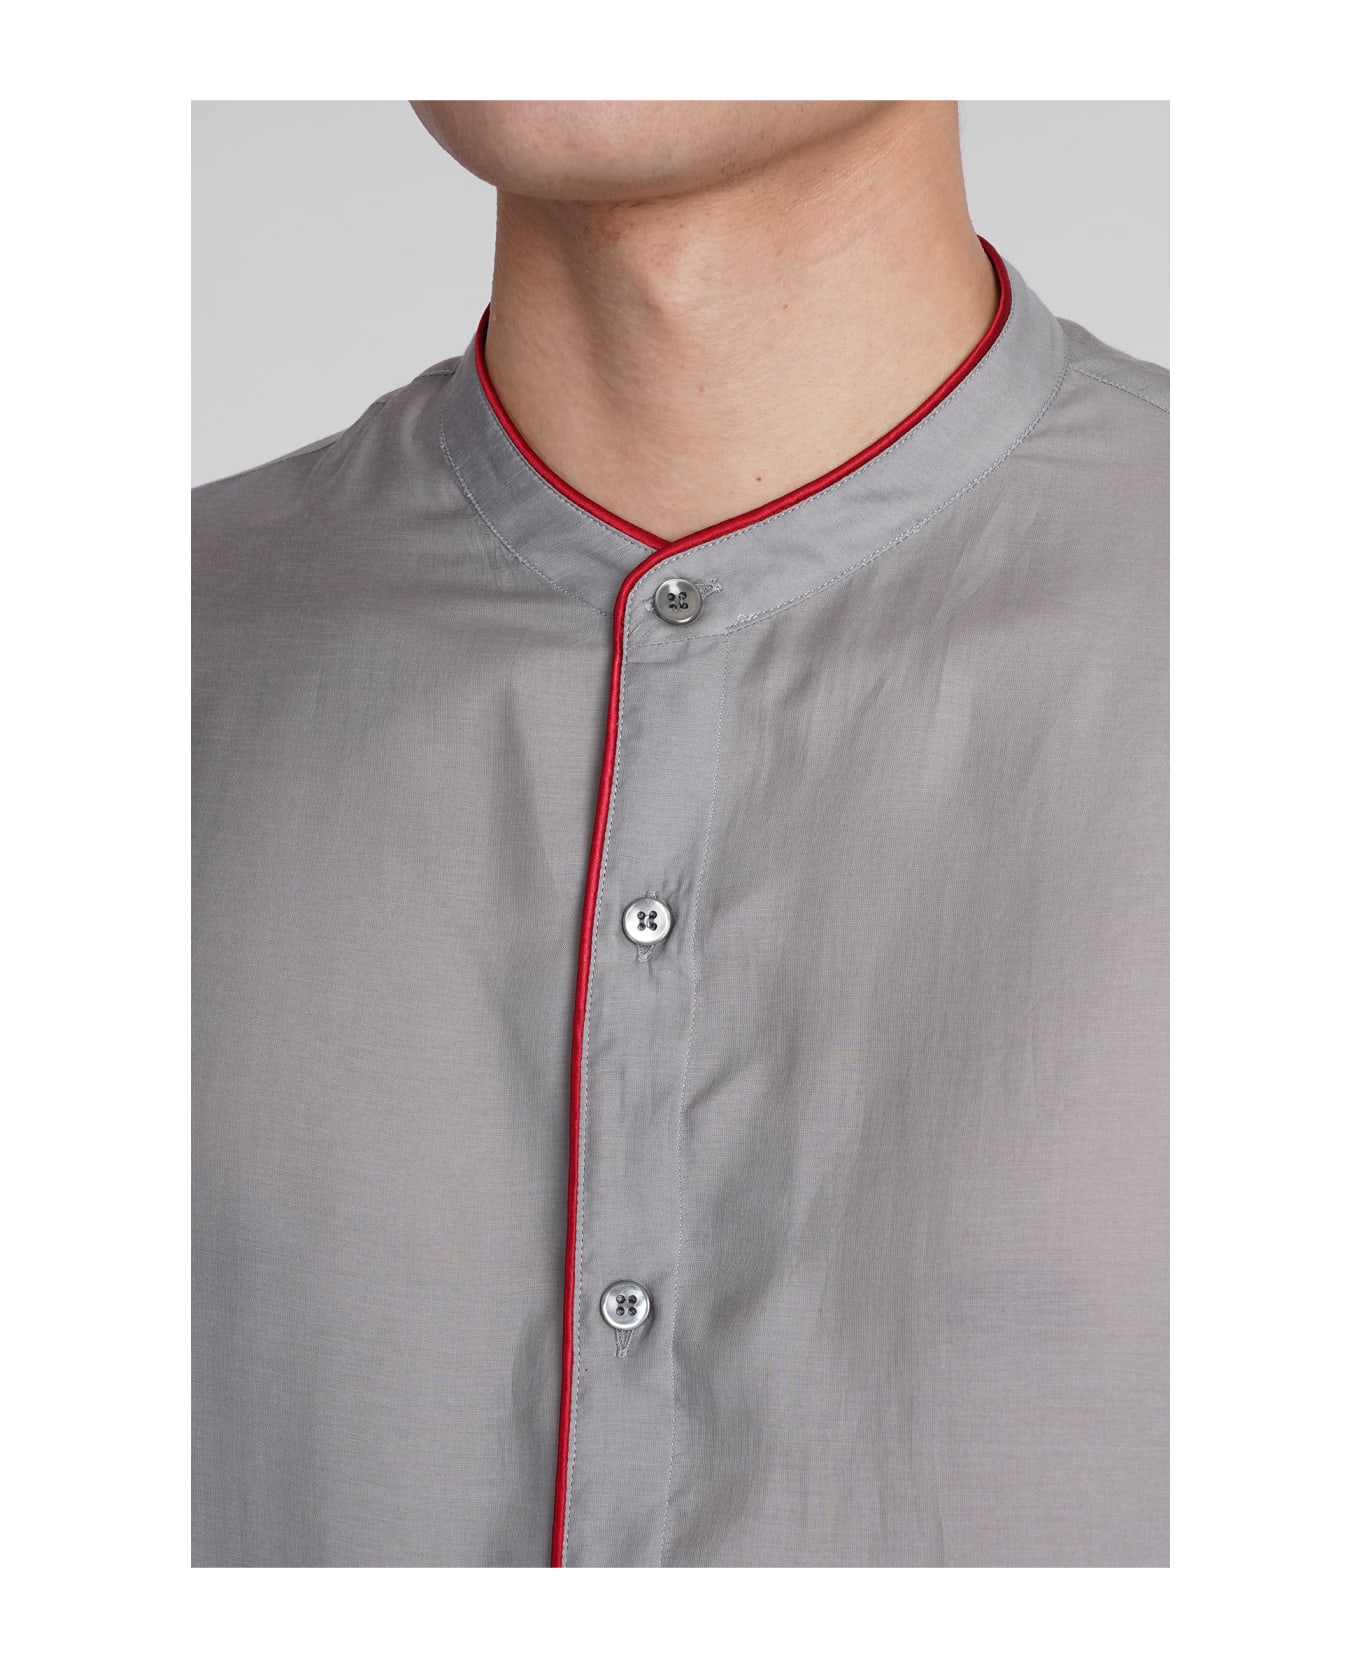 Giorgio Armani Shirt In Grey Wool And Polyester - grey